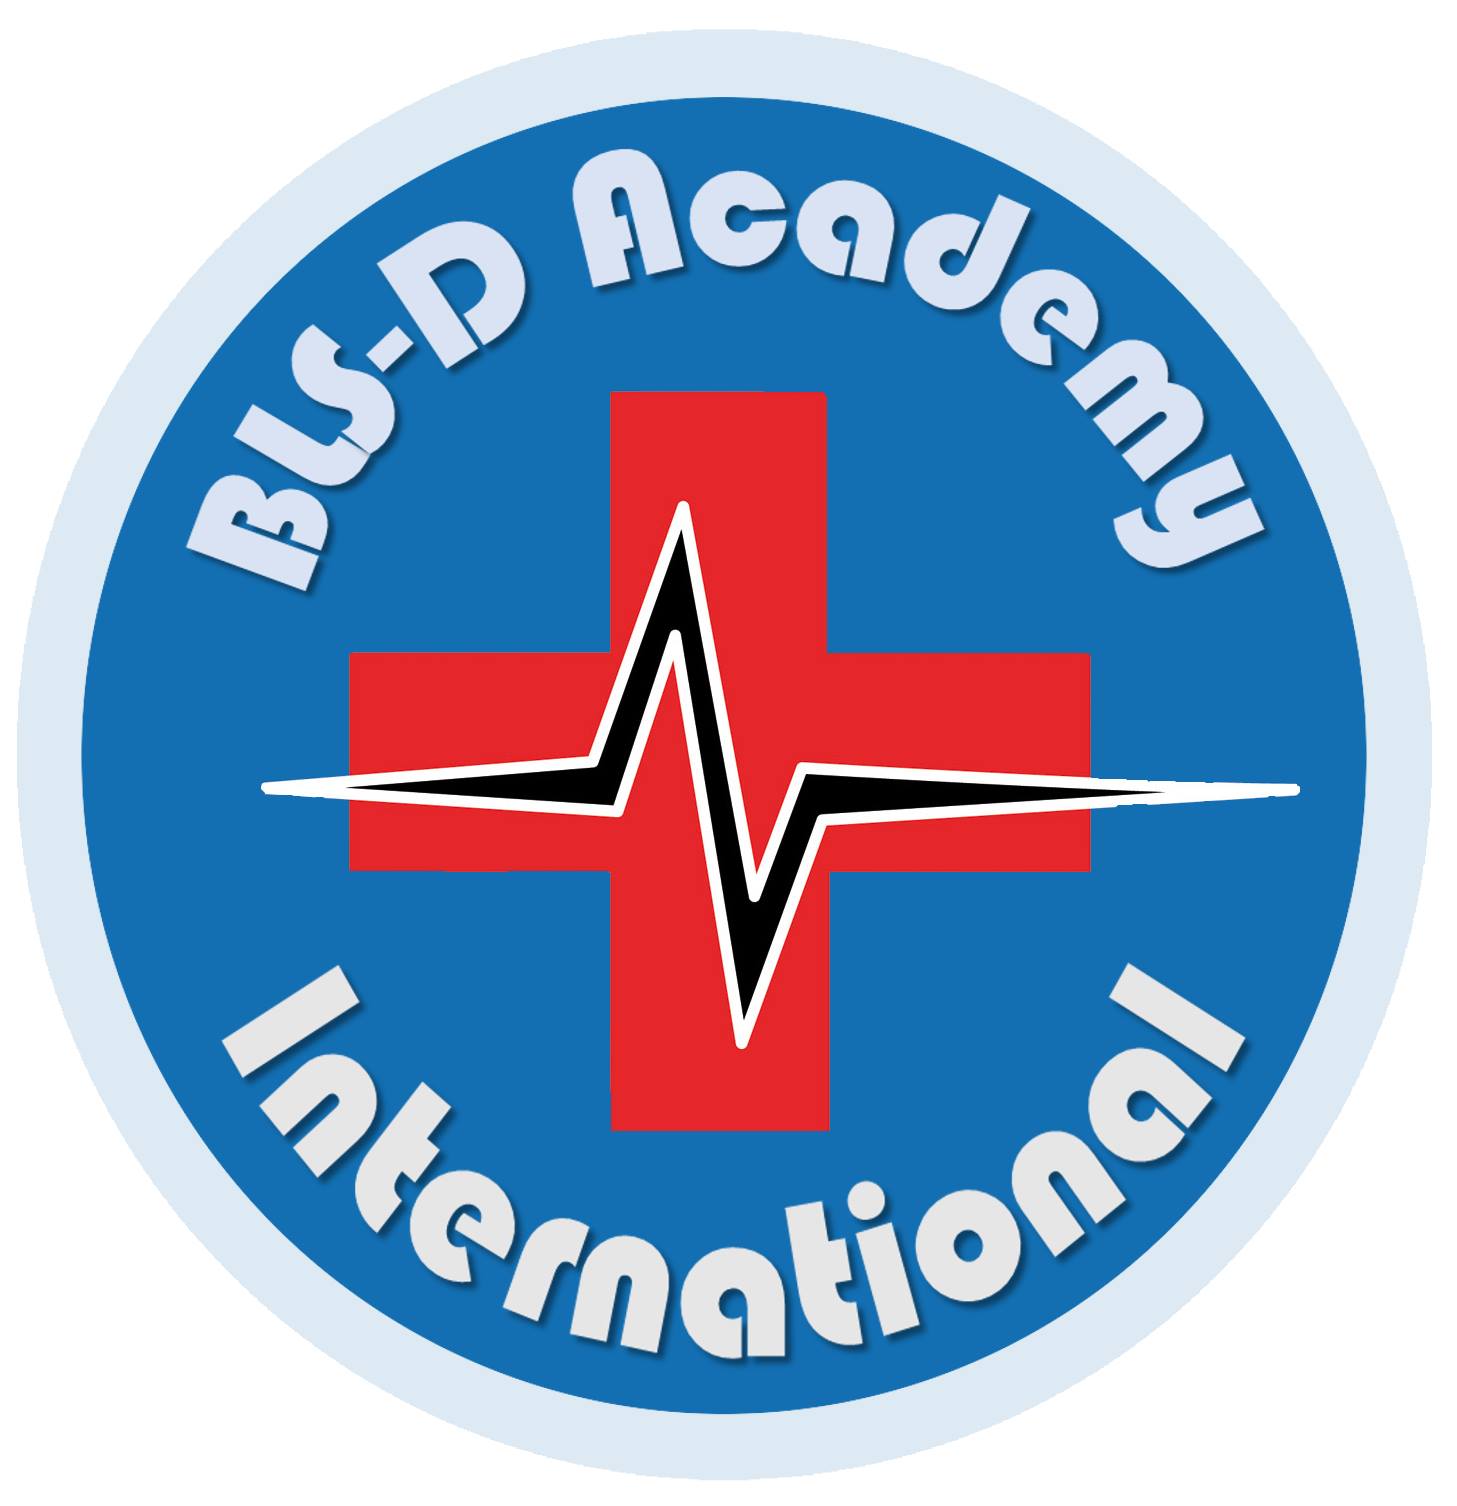 blsd academy logo